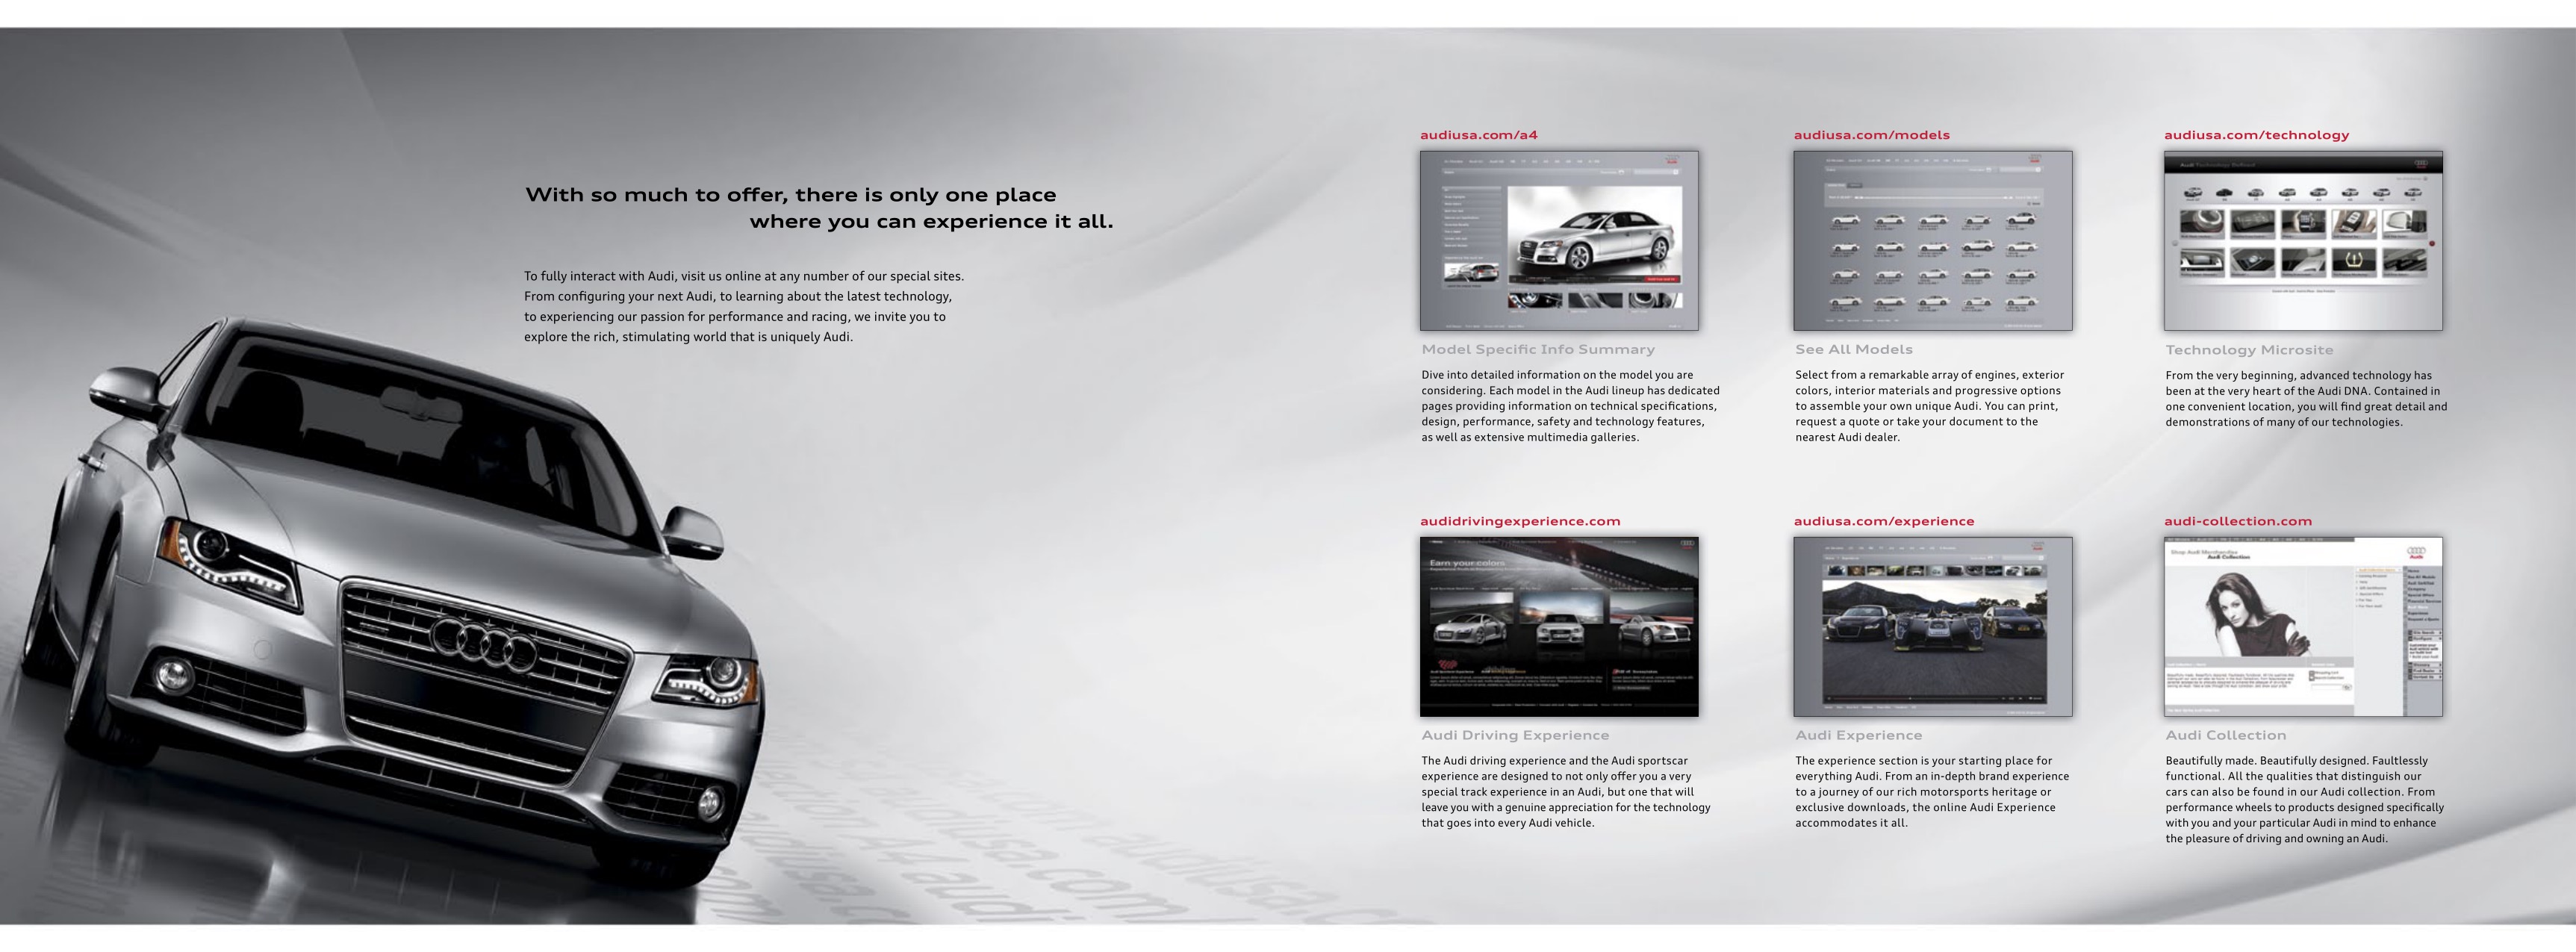 2010 Audi A4 Brochure Page 20